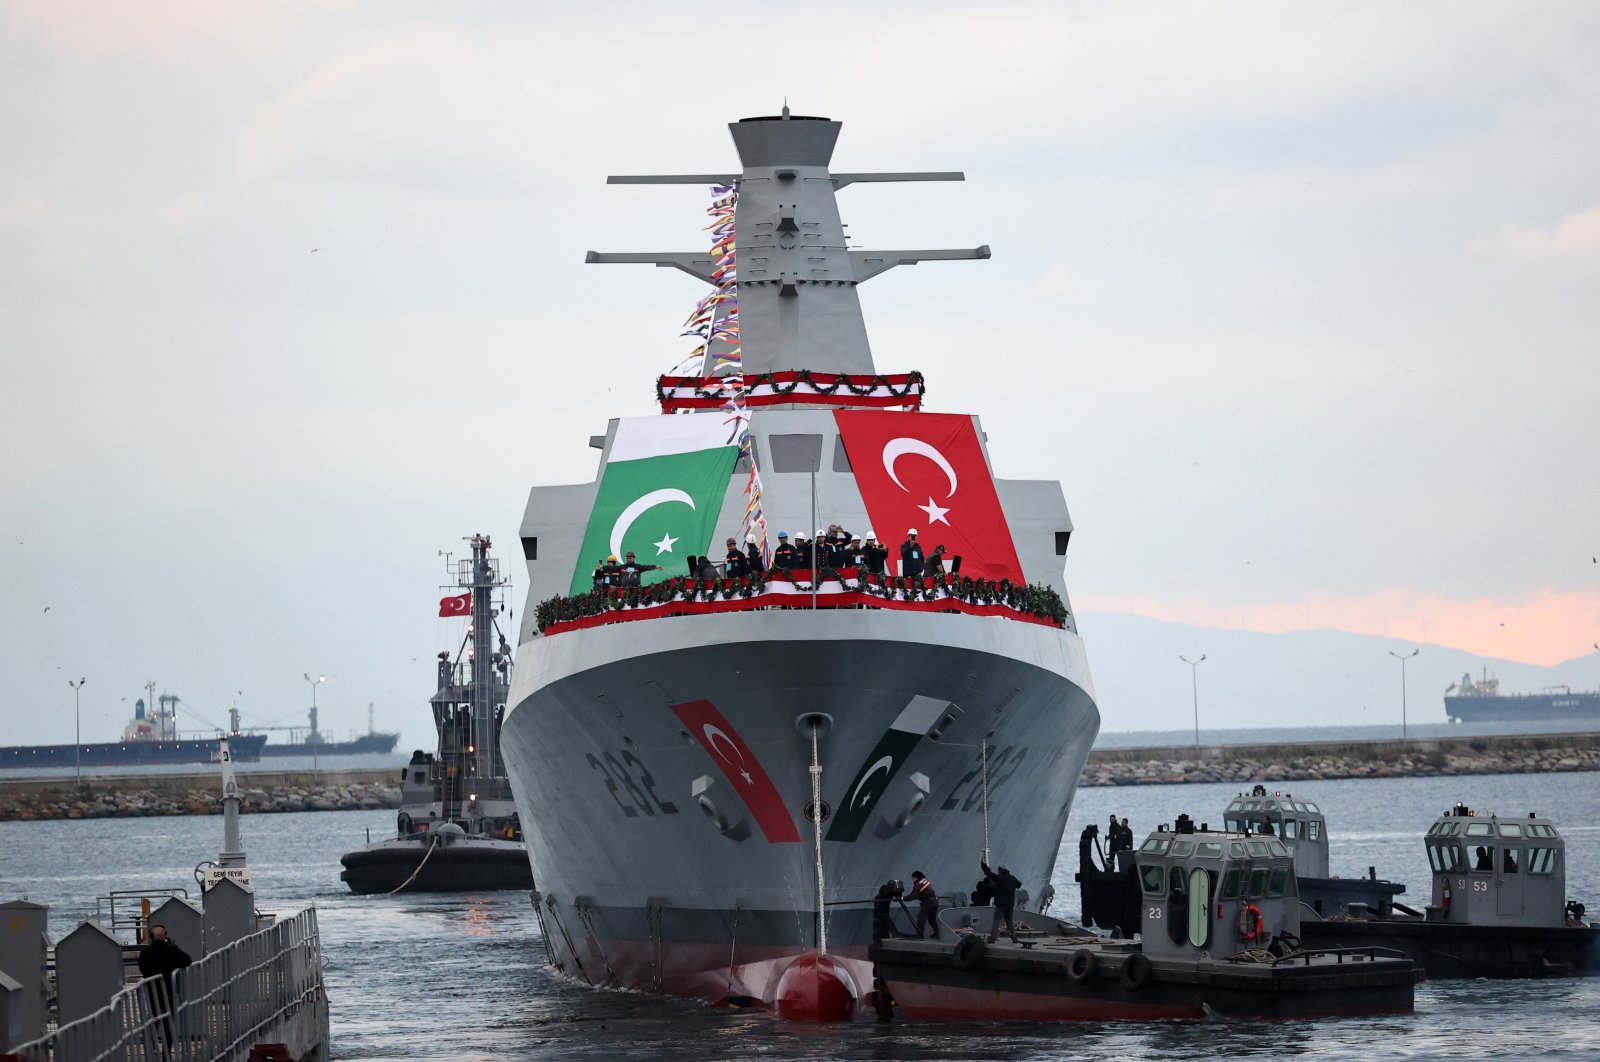 Korvet buatan Turki untuk menambah kekuatan pertahanan pesisir Pakistan: Komandan Angkatan Laut